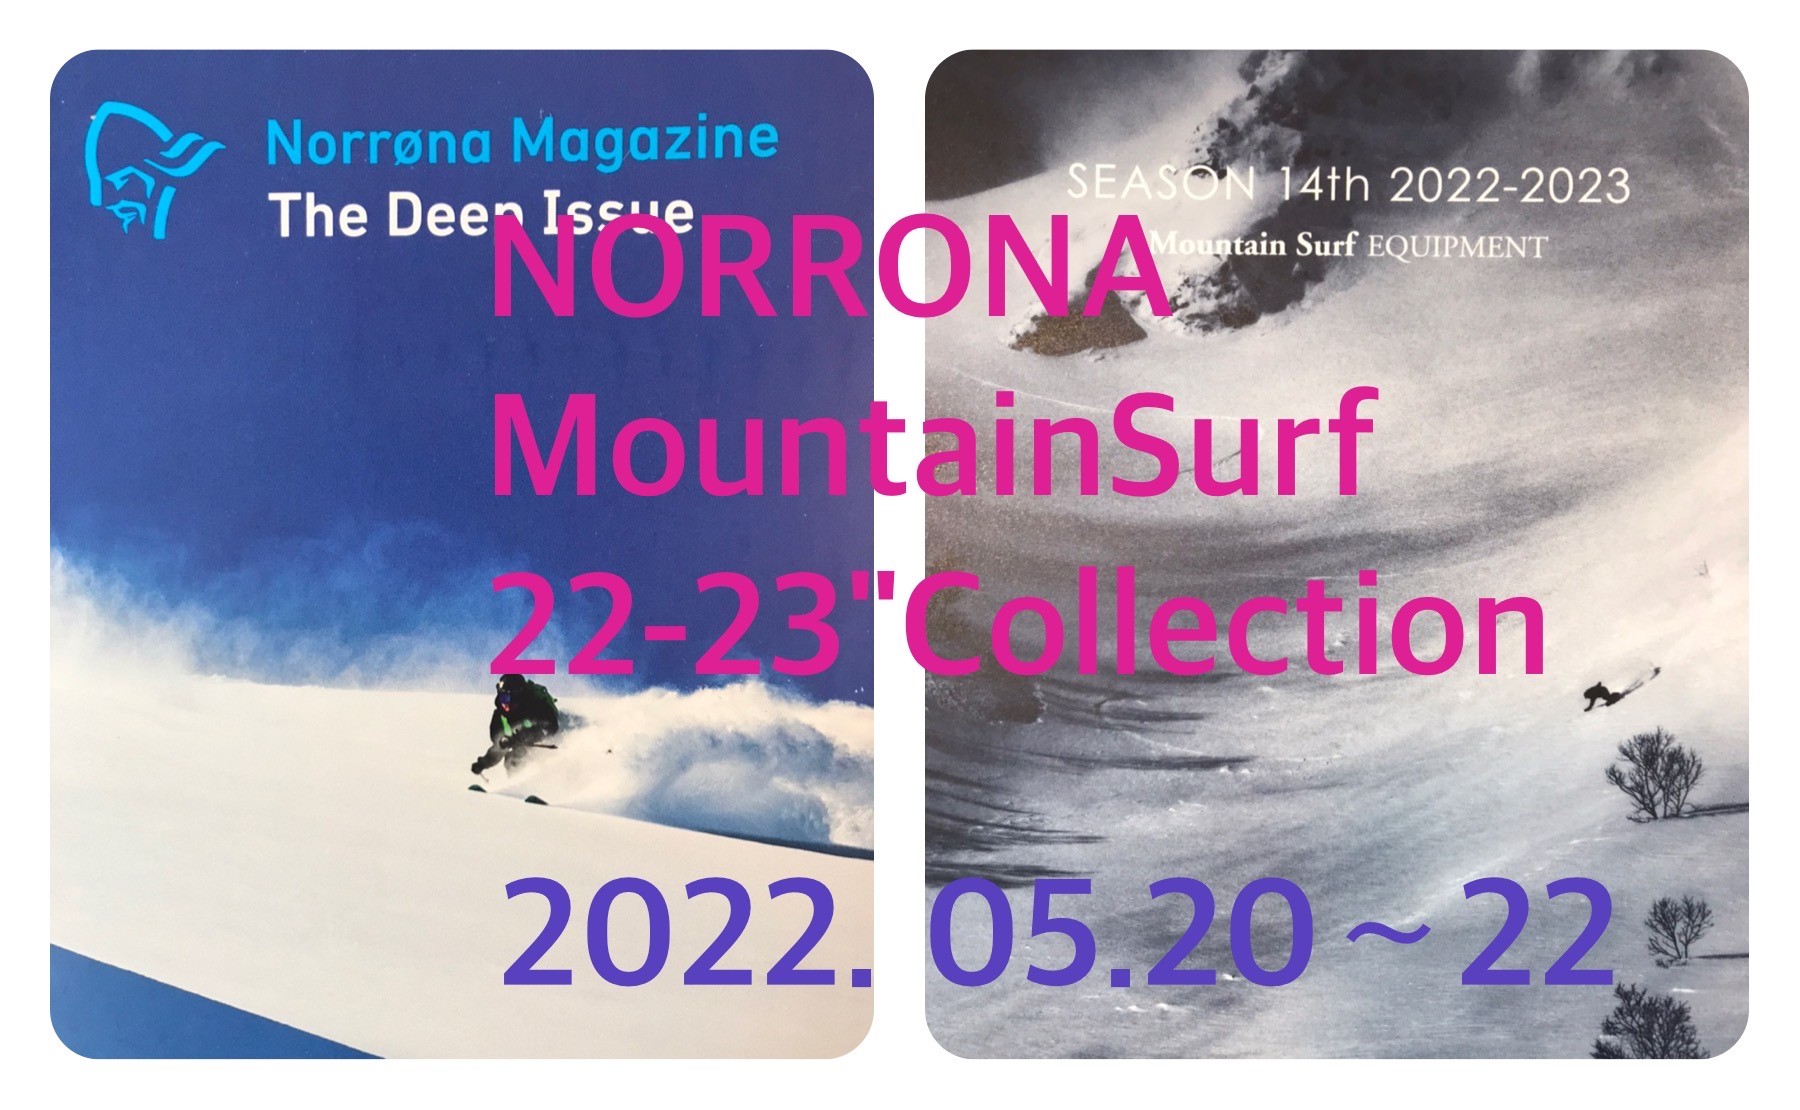 NORRONA MountainSurf collection